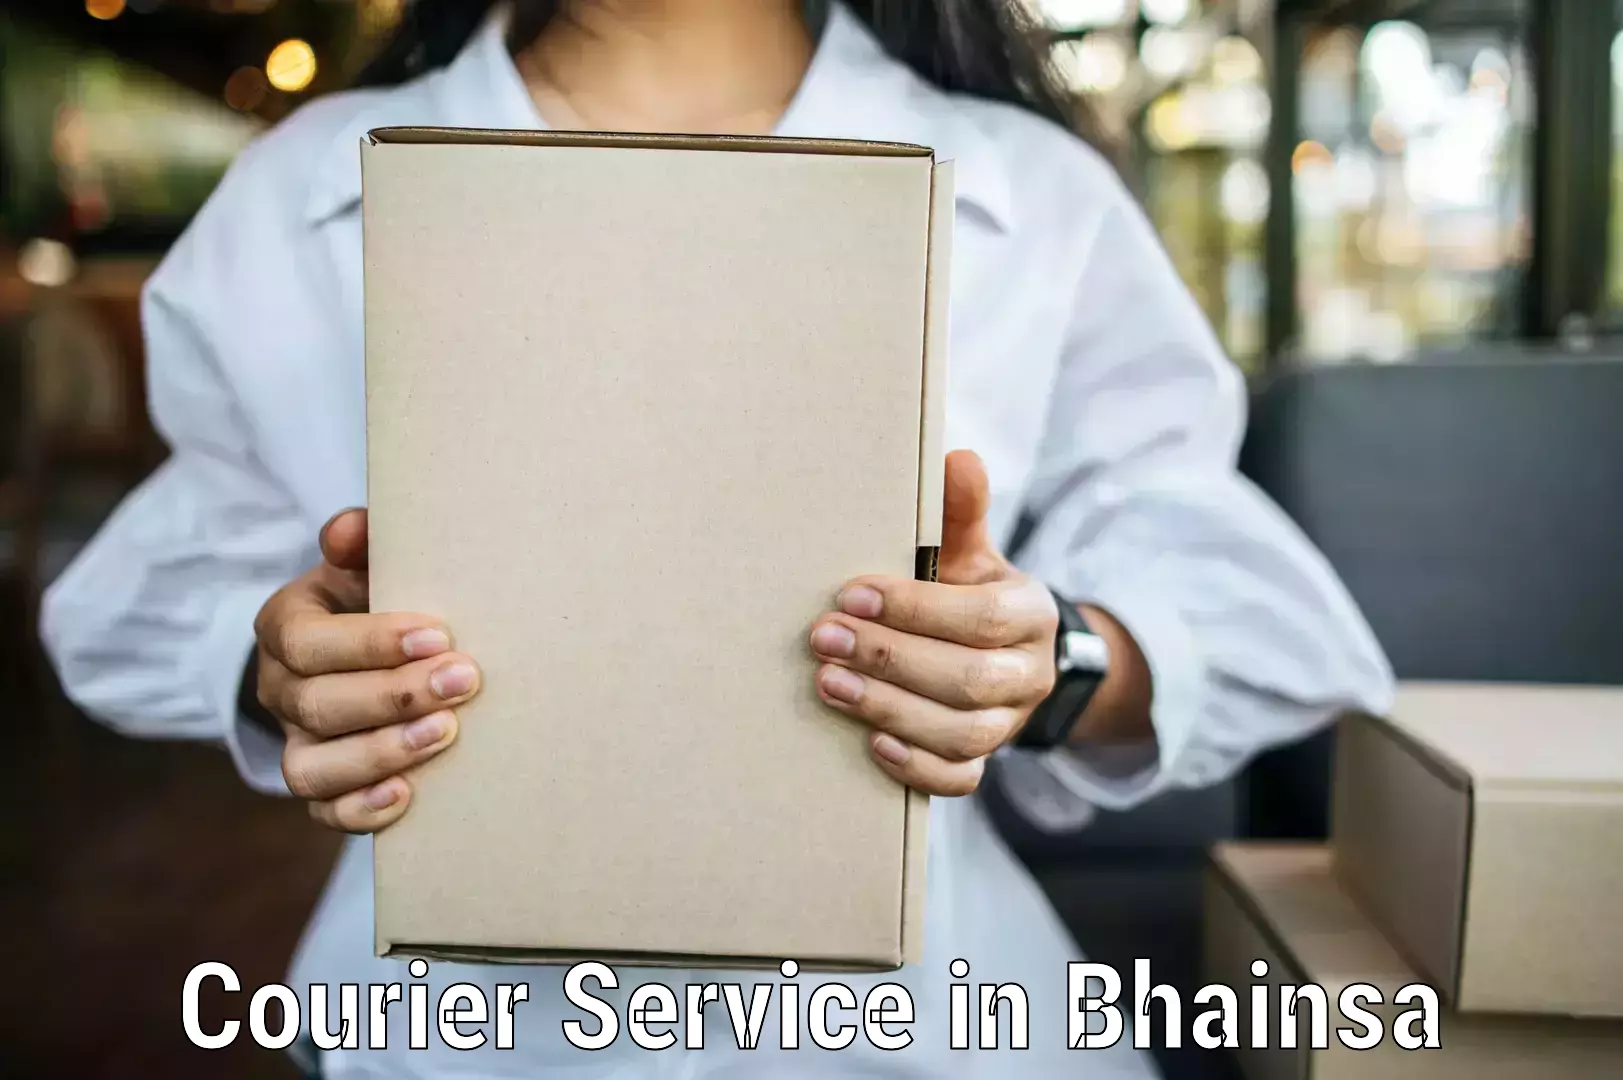 Courier service comparison in Bhainsa